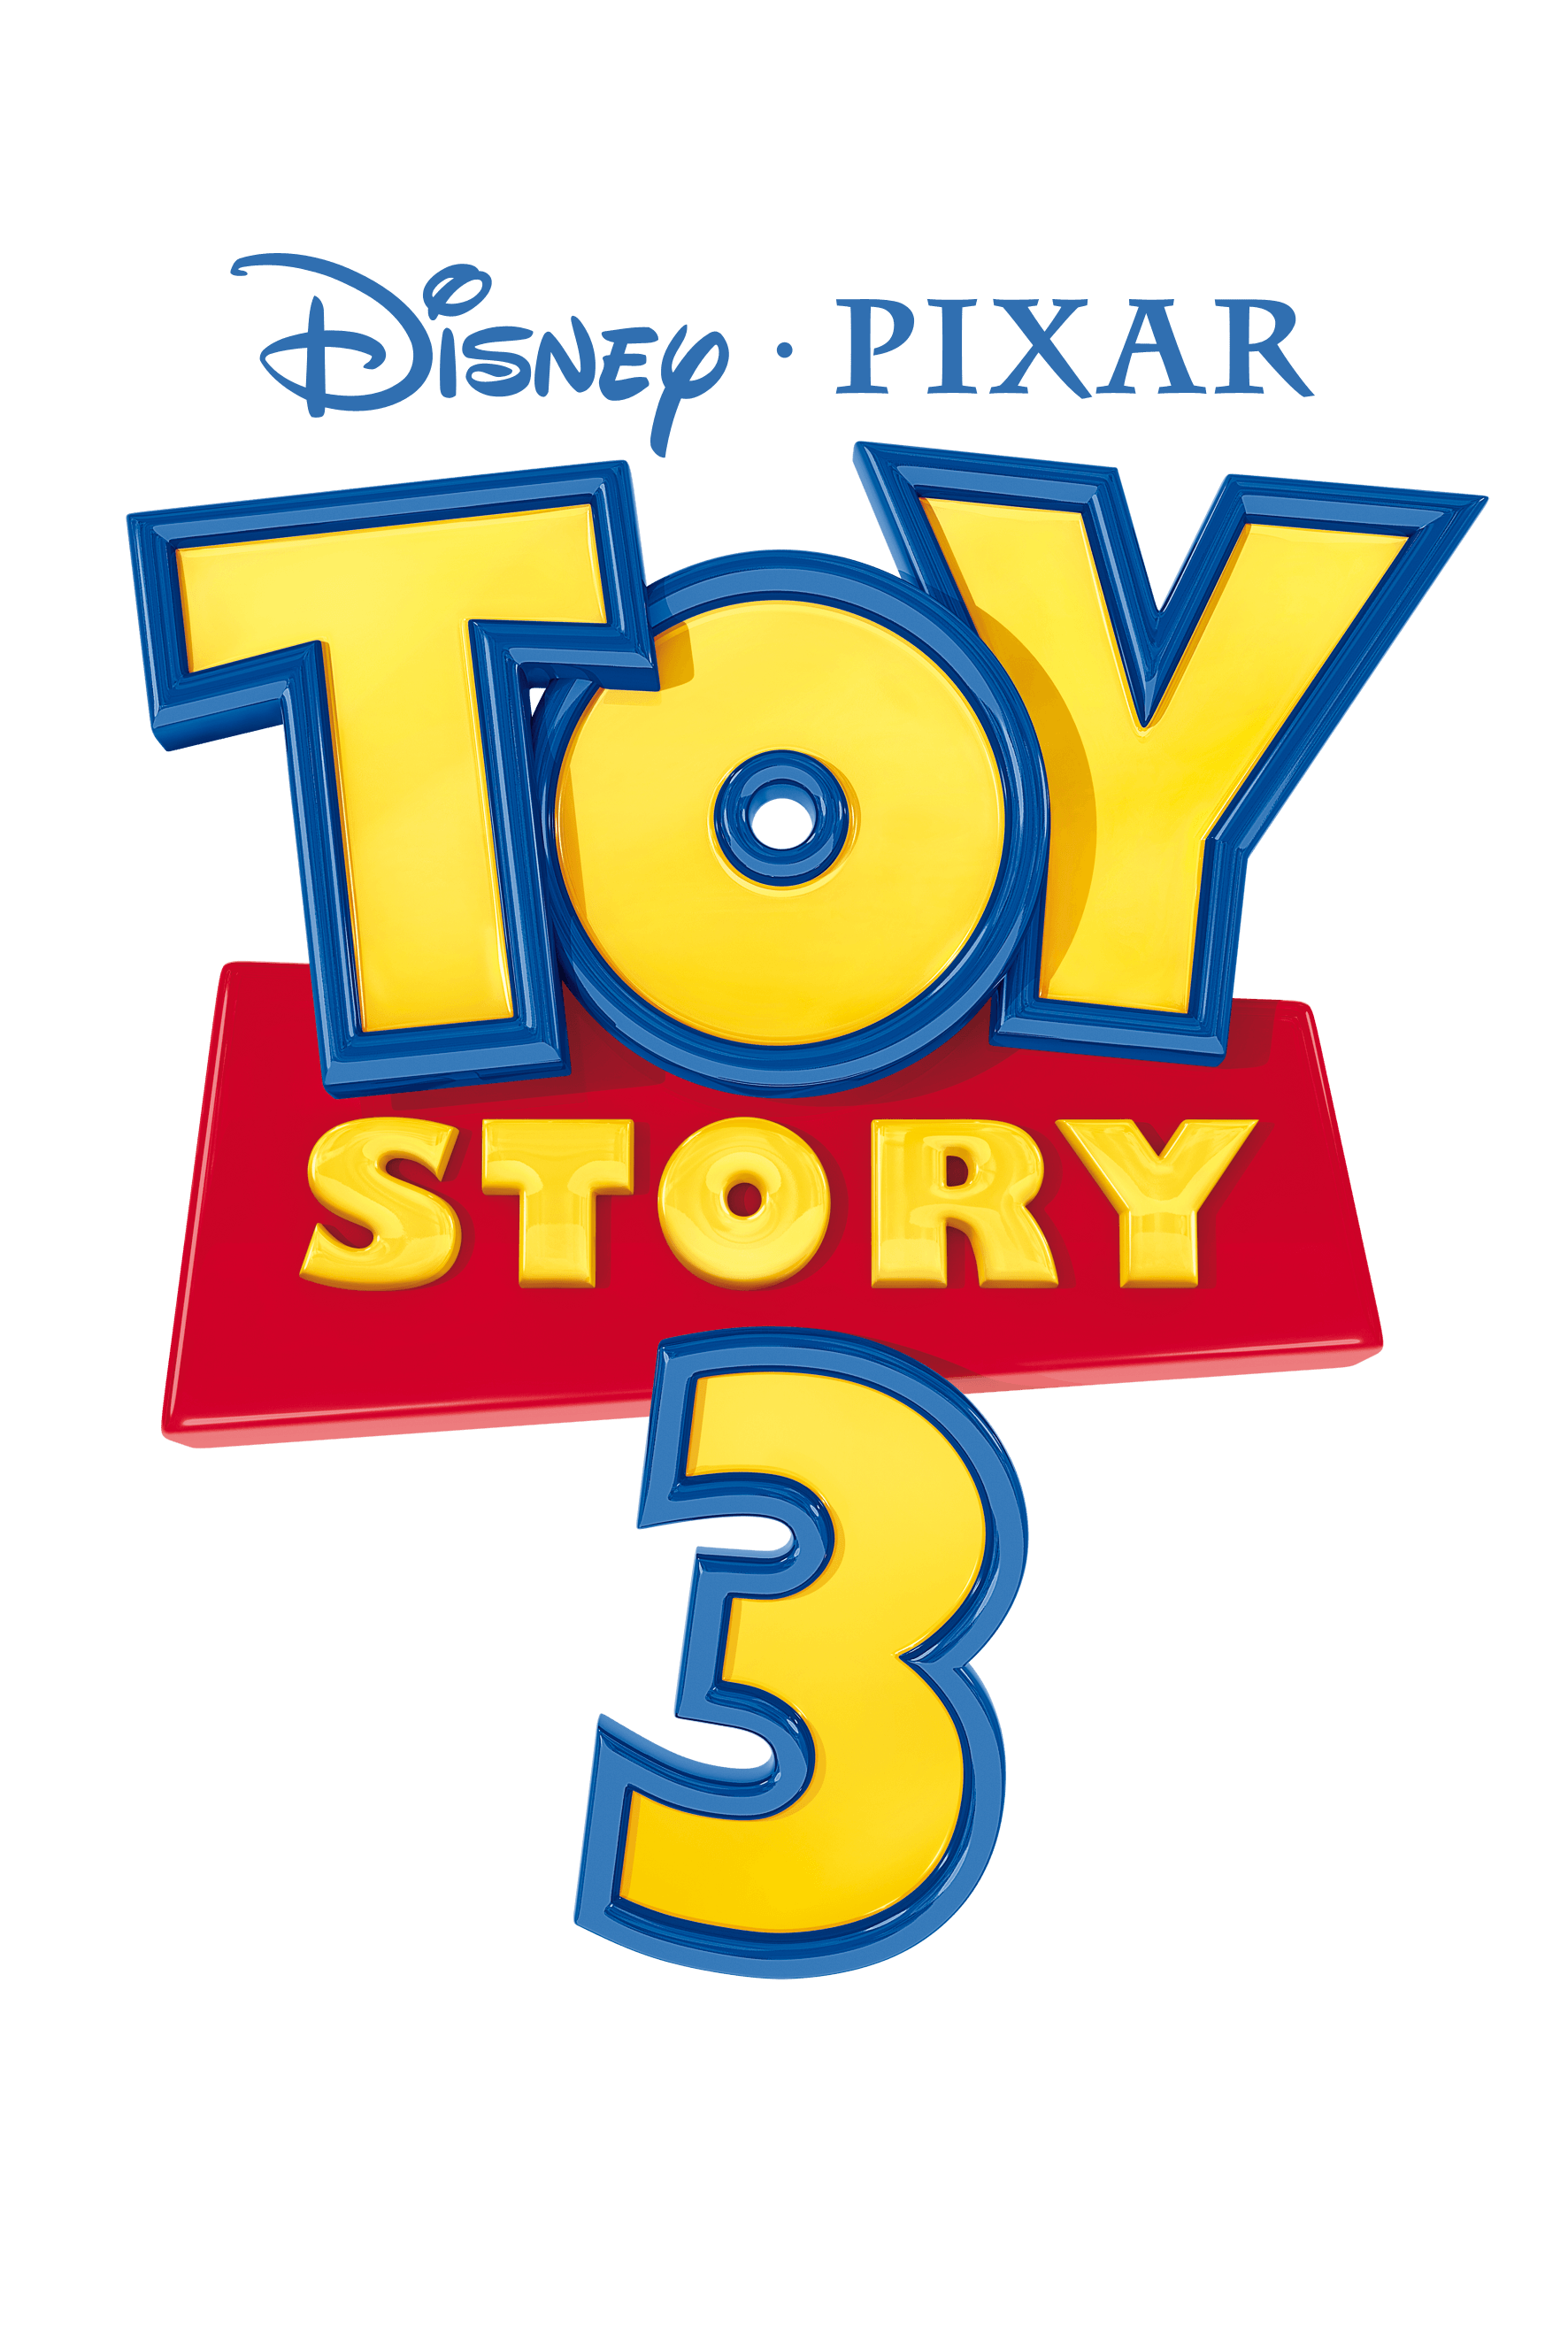 MB Toy Logo - Image - Toy Story 3 logo.png | Jack Miller's Webpage of Disney Wiki ...